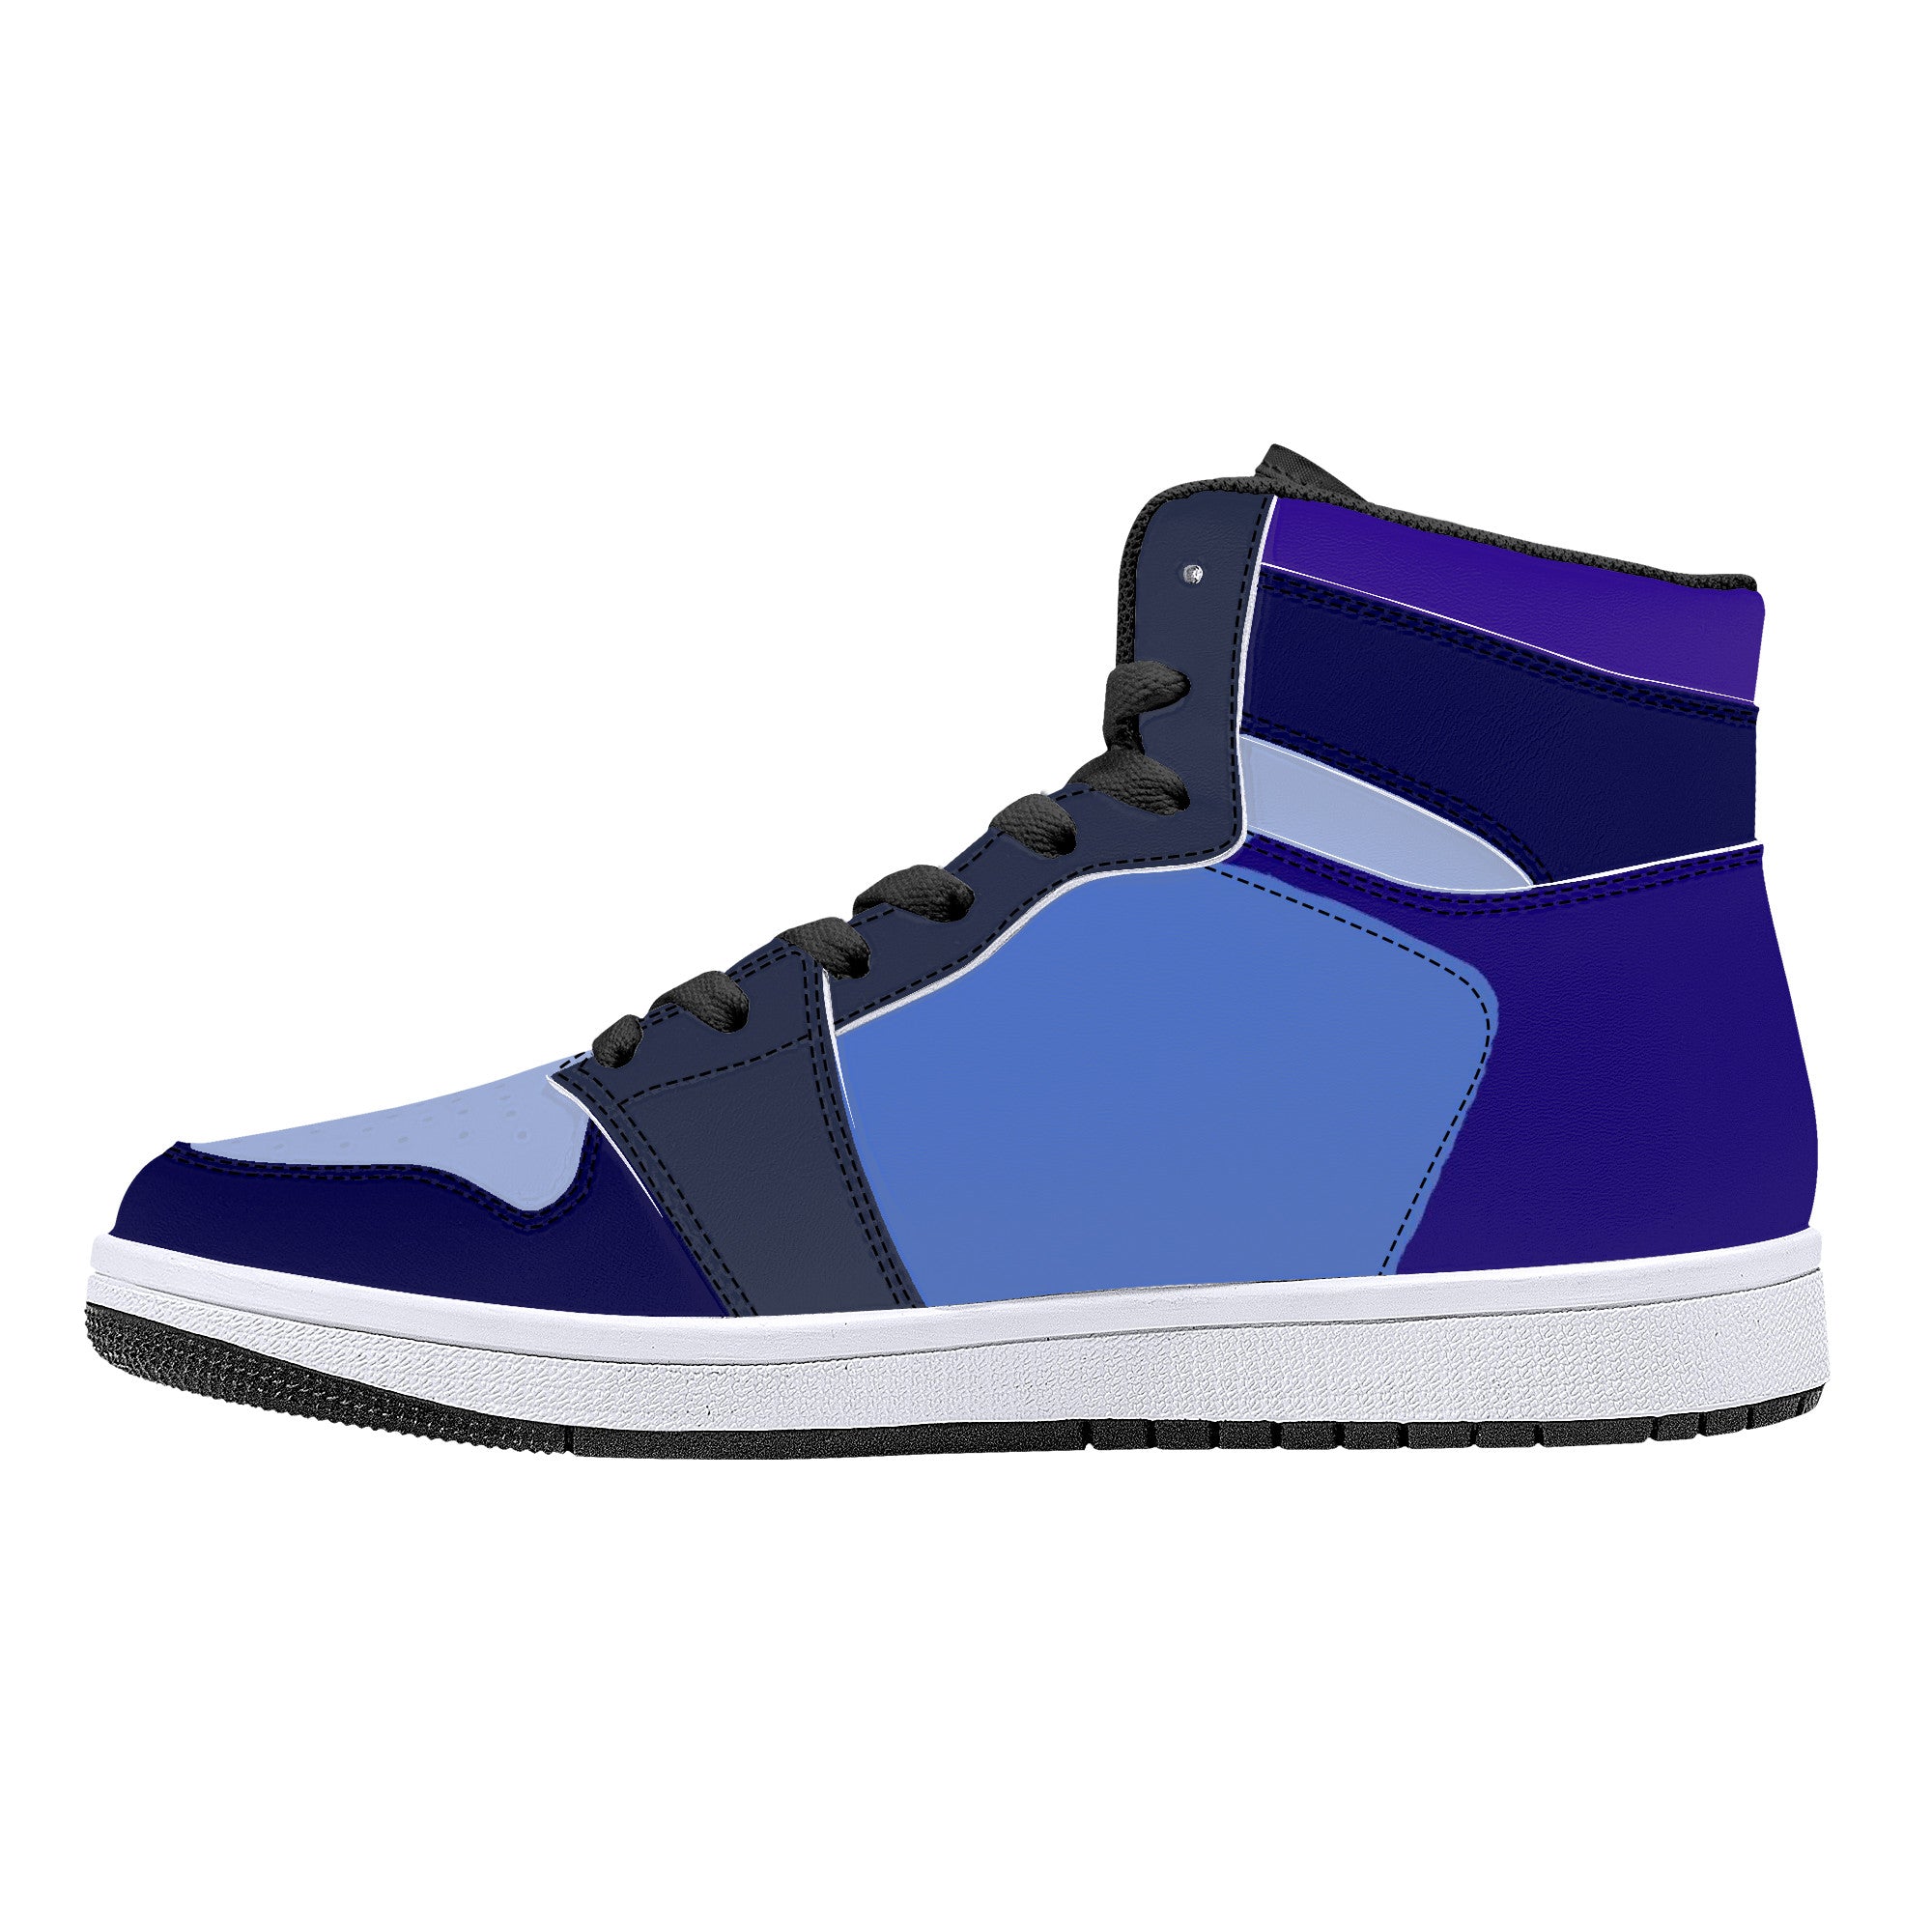 Cool shoes by Mason L | High Top Customized | Shoe Zero